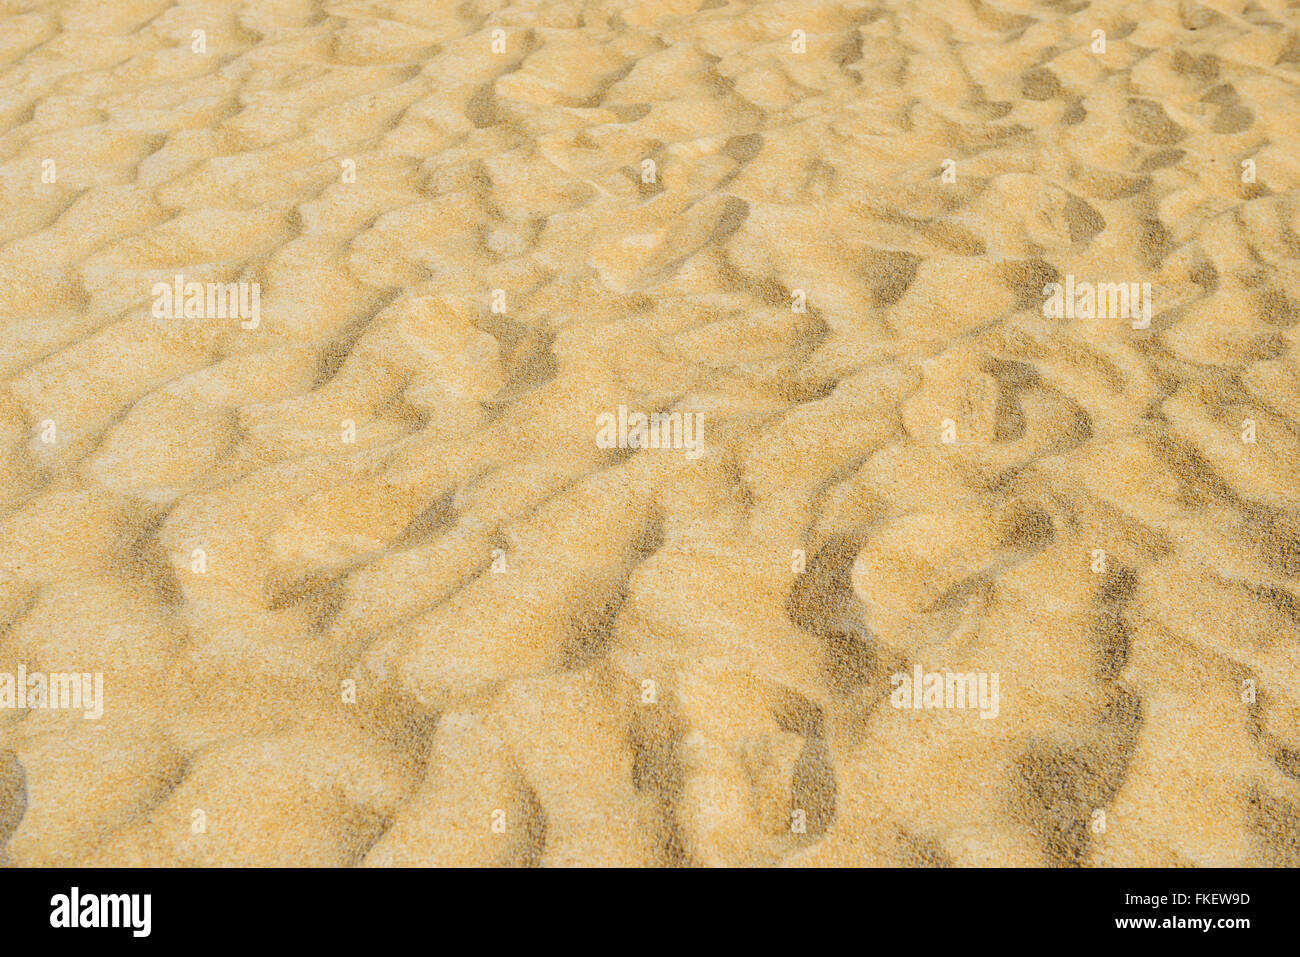 Onde di sabbia Foto Stock